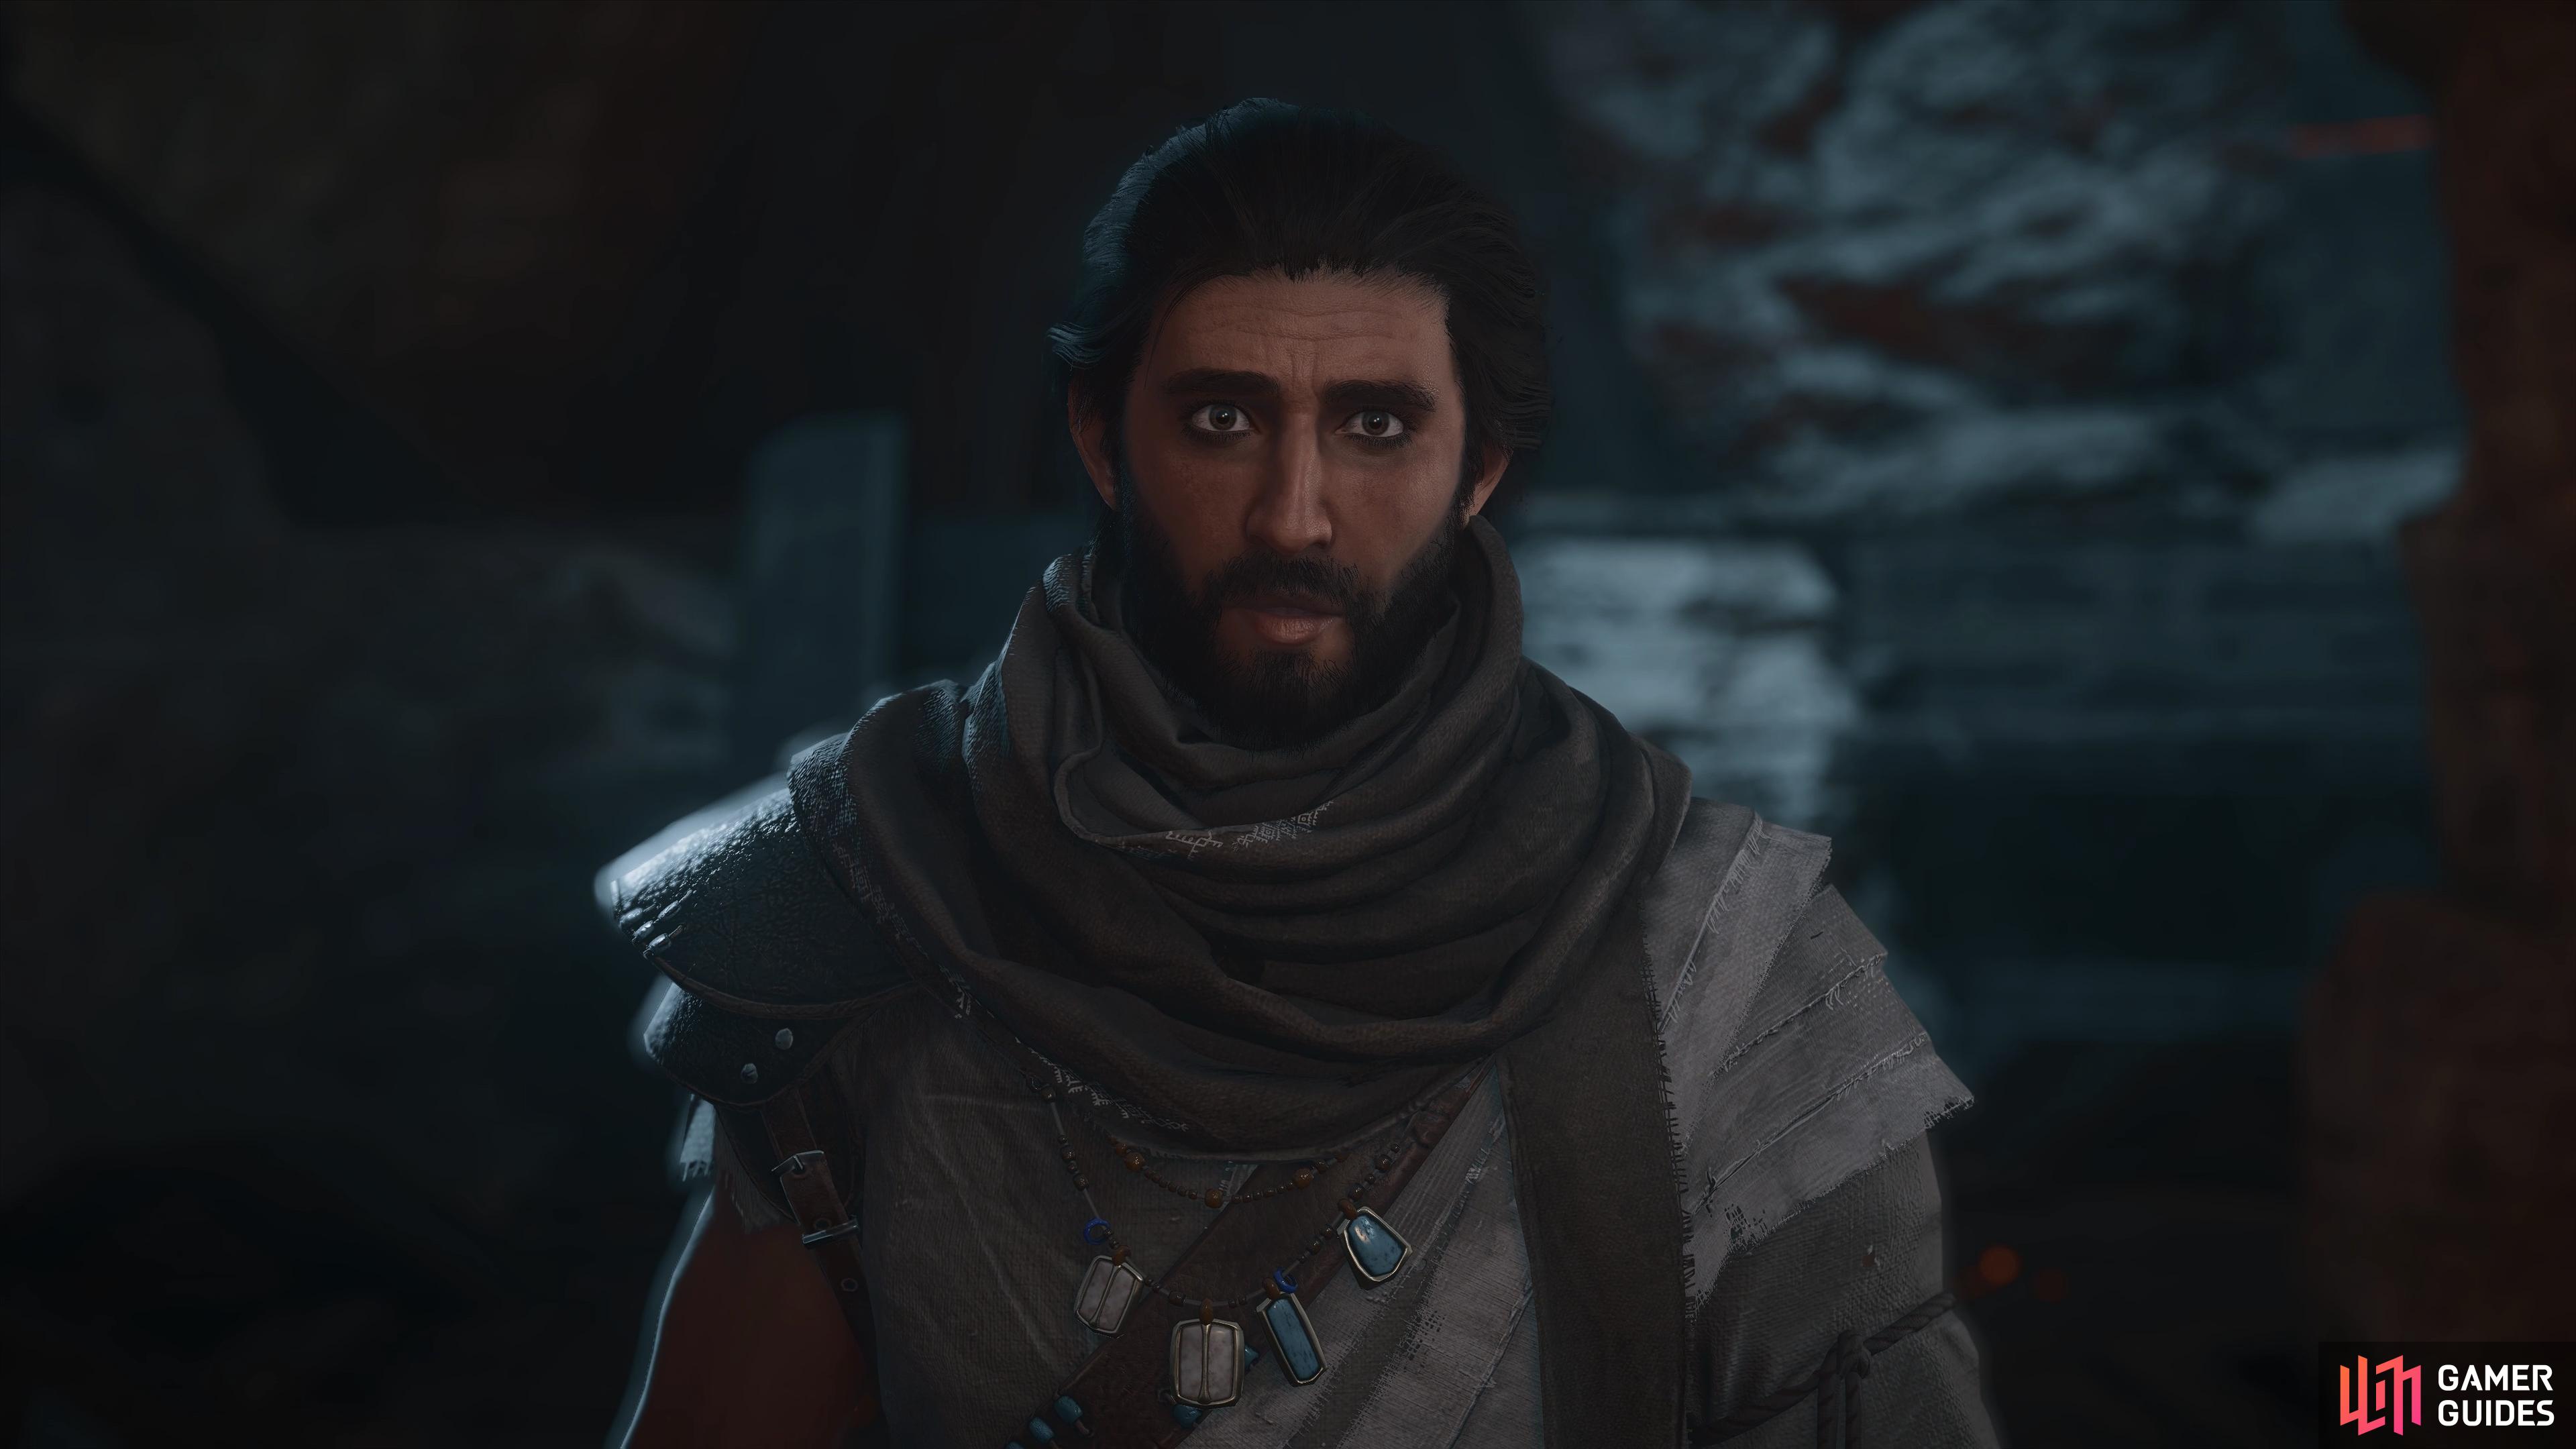 Assassin's Creed Mirage - Basim Kills The Treasurer [ HARD